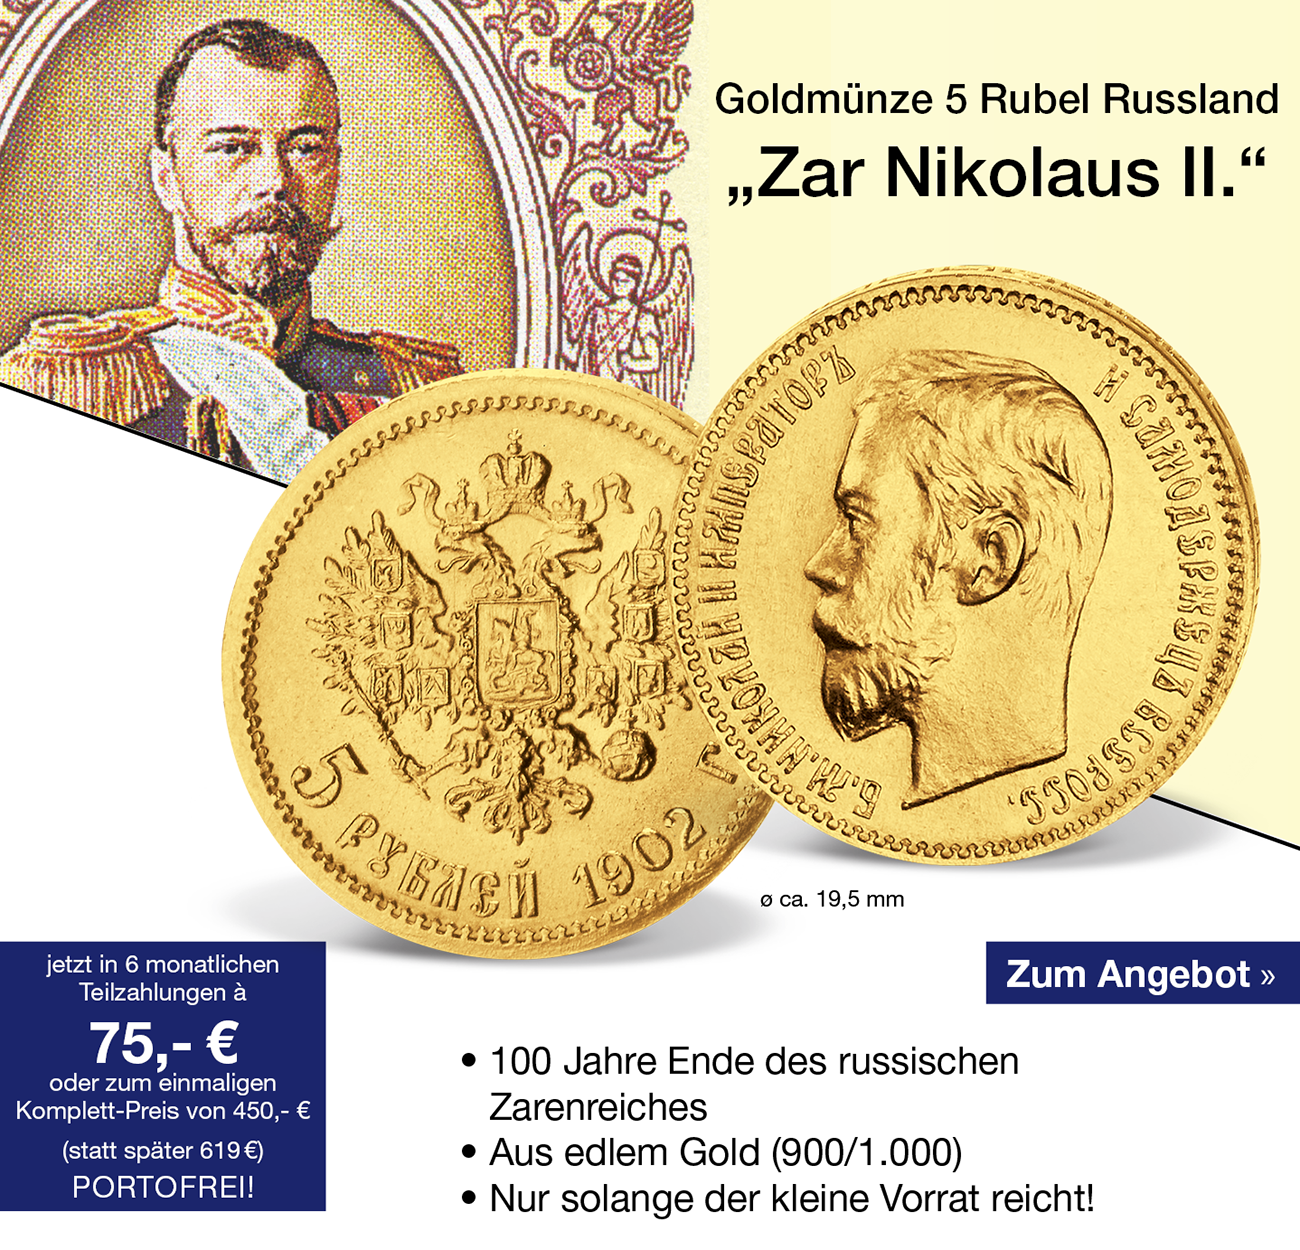  Goldmünze 5 Rubel Russland Zar Nikolaus II.